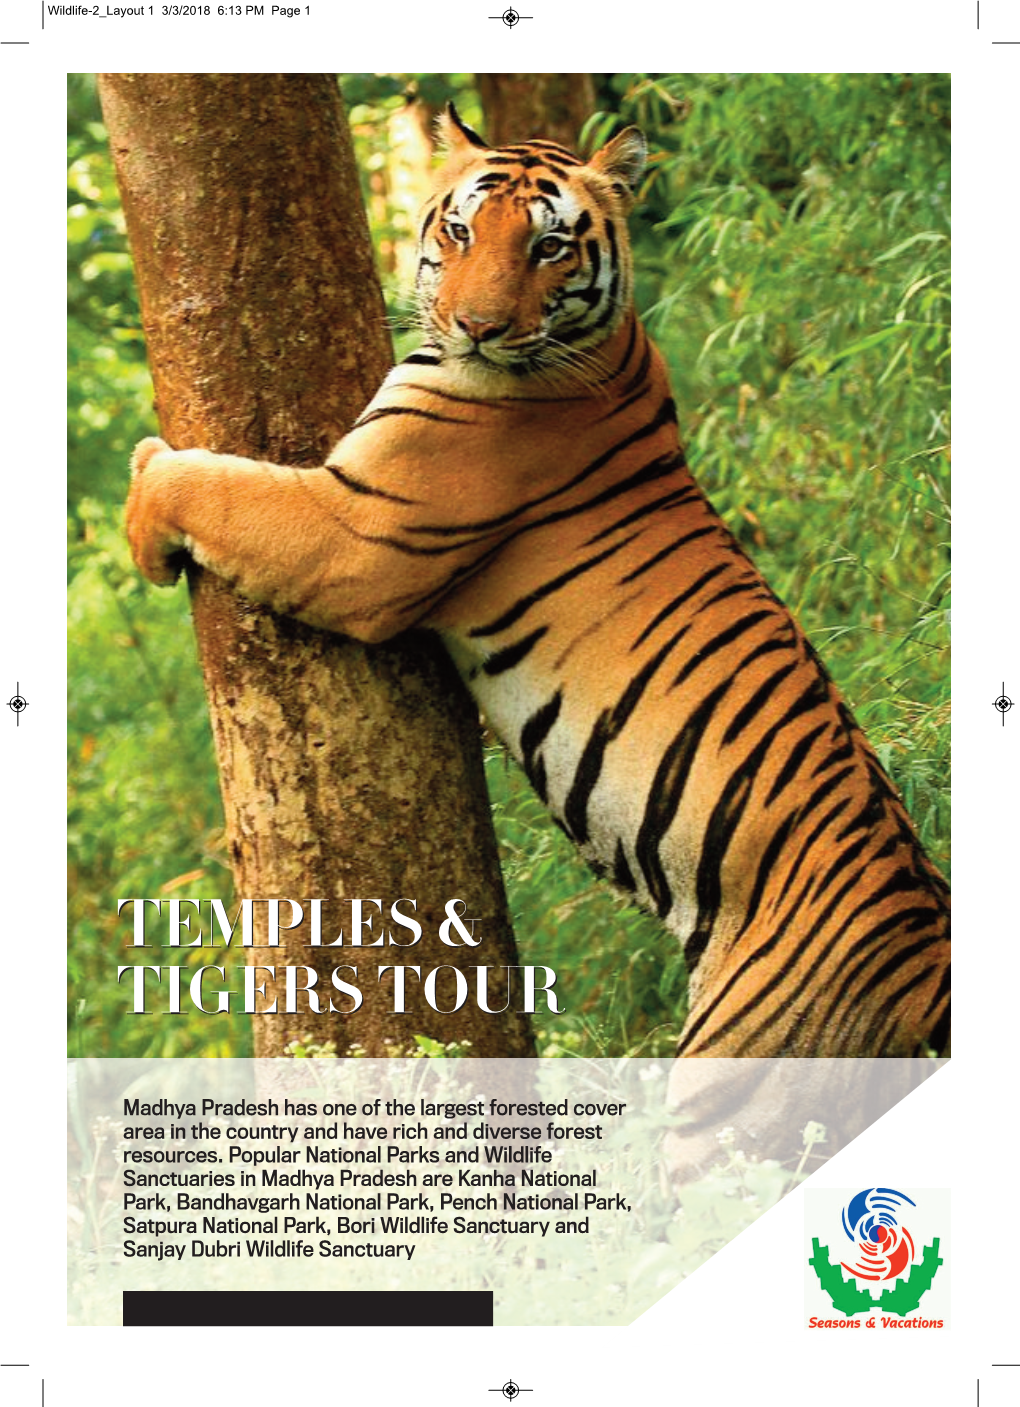 Temples & Tigers Tour